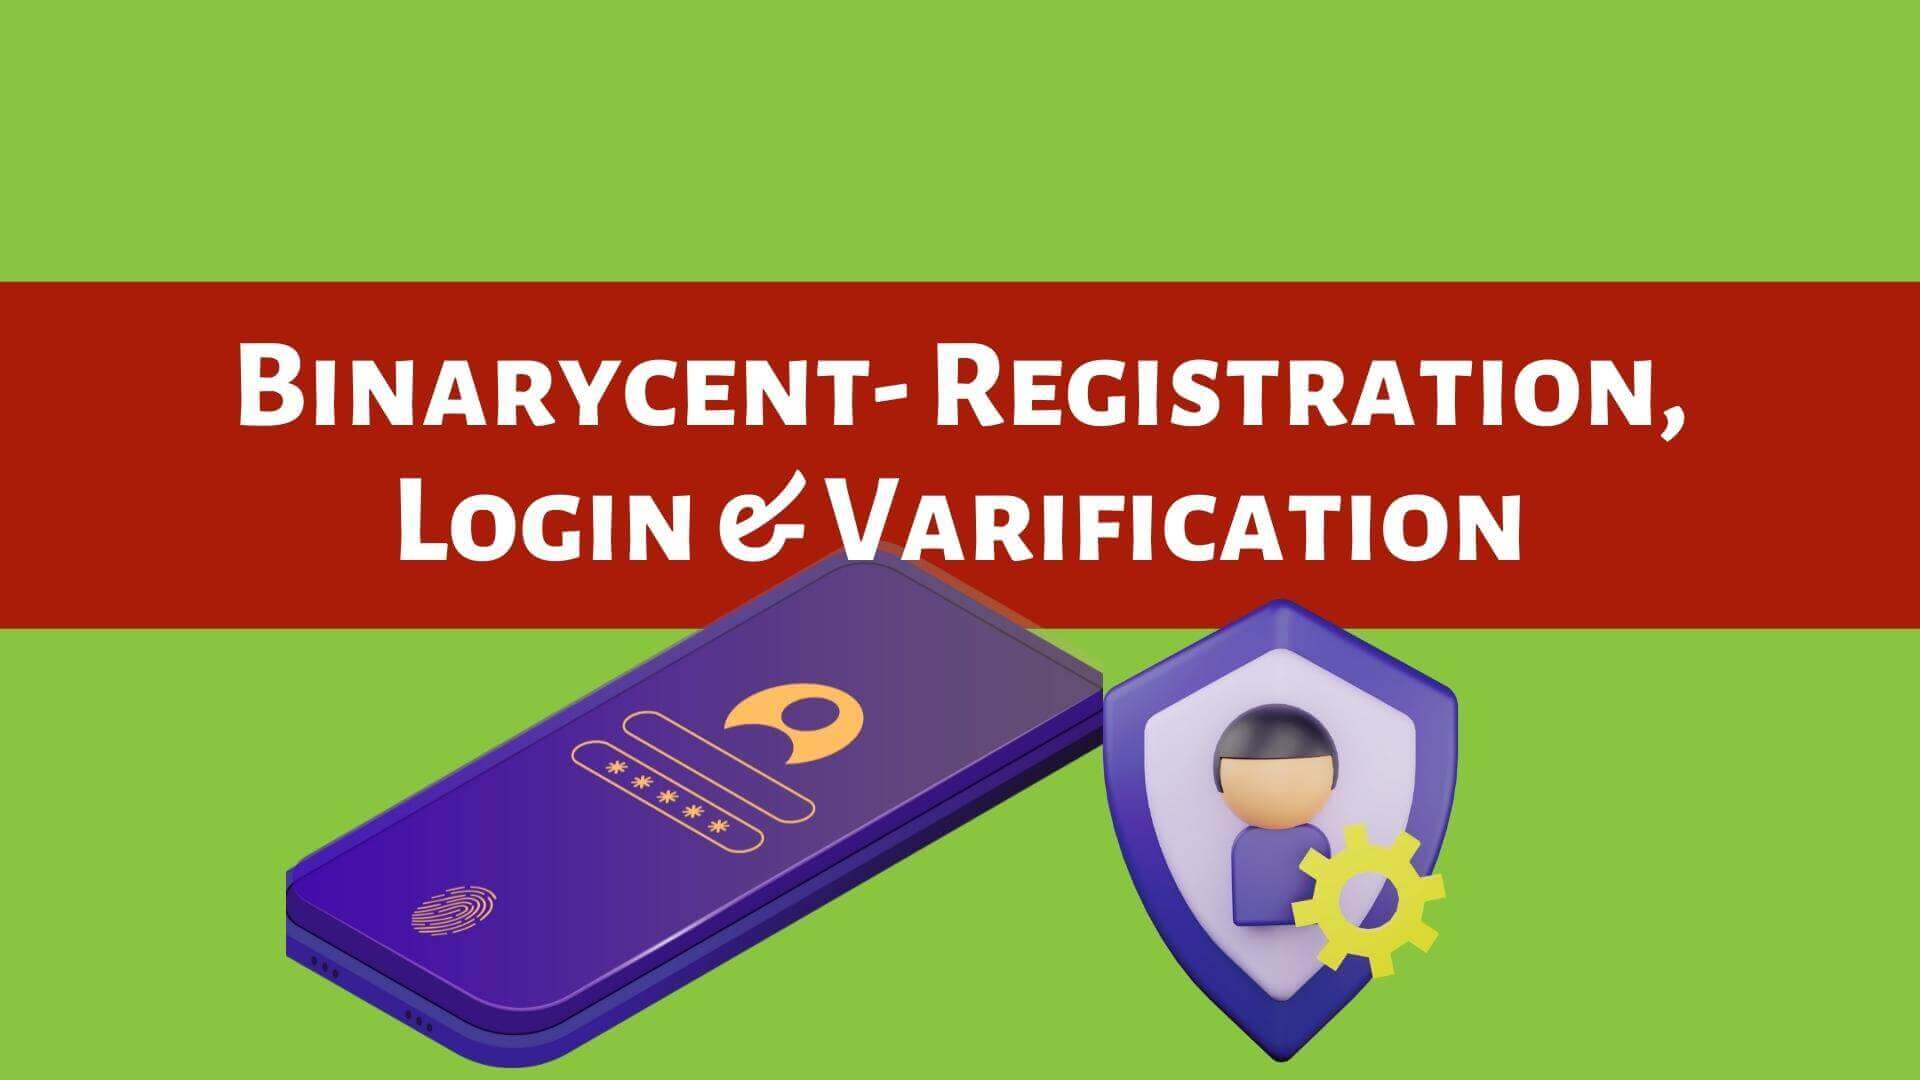 Binarycent Registration Login And Verification Process - Binoption